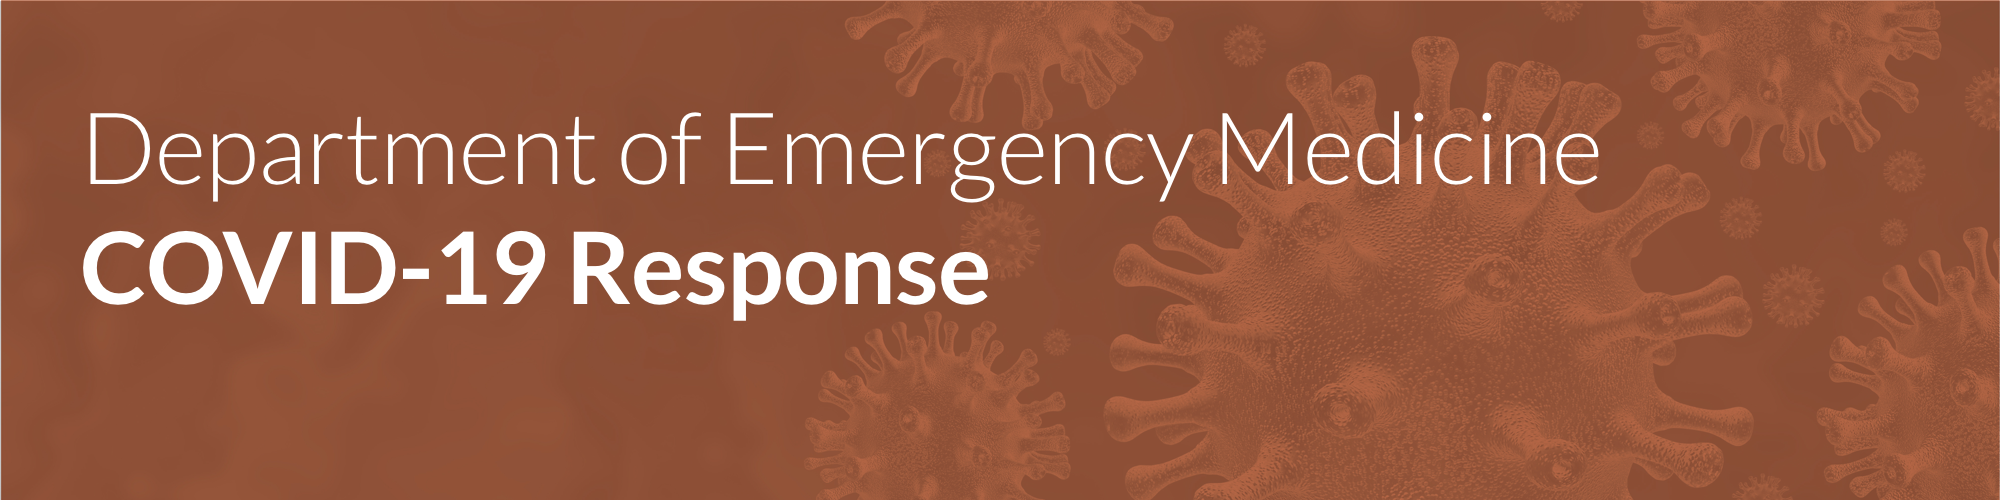 Department of Emergency Medicine: COVID-19 Response